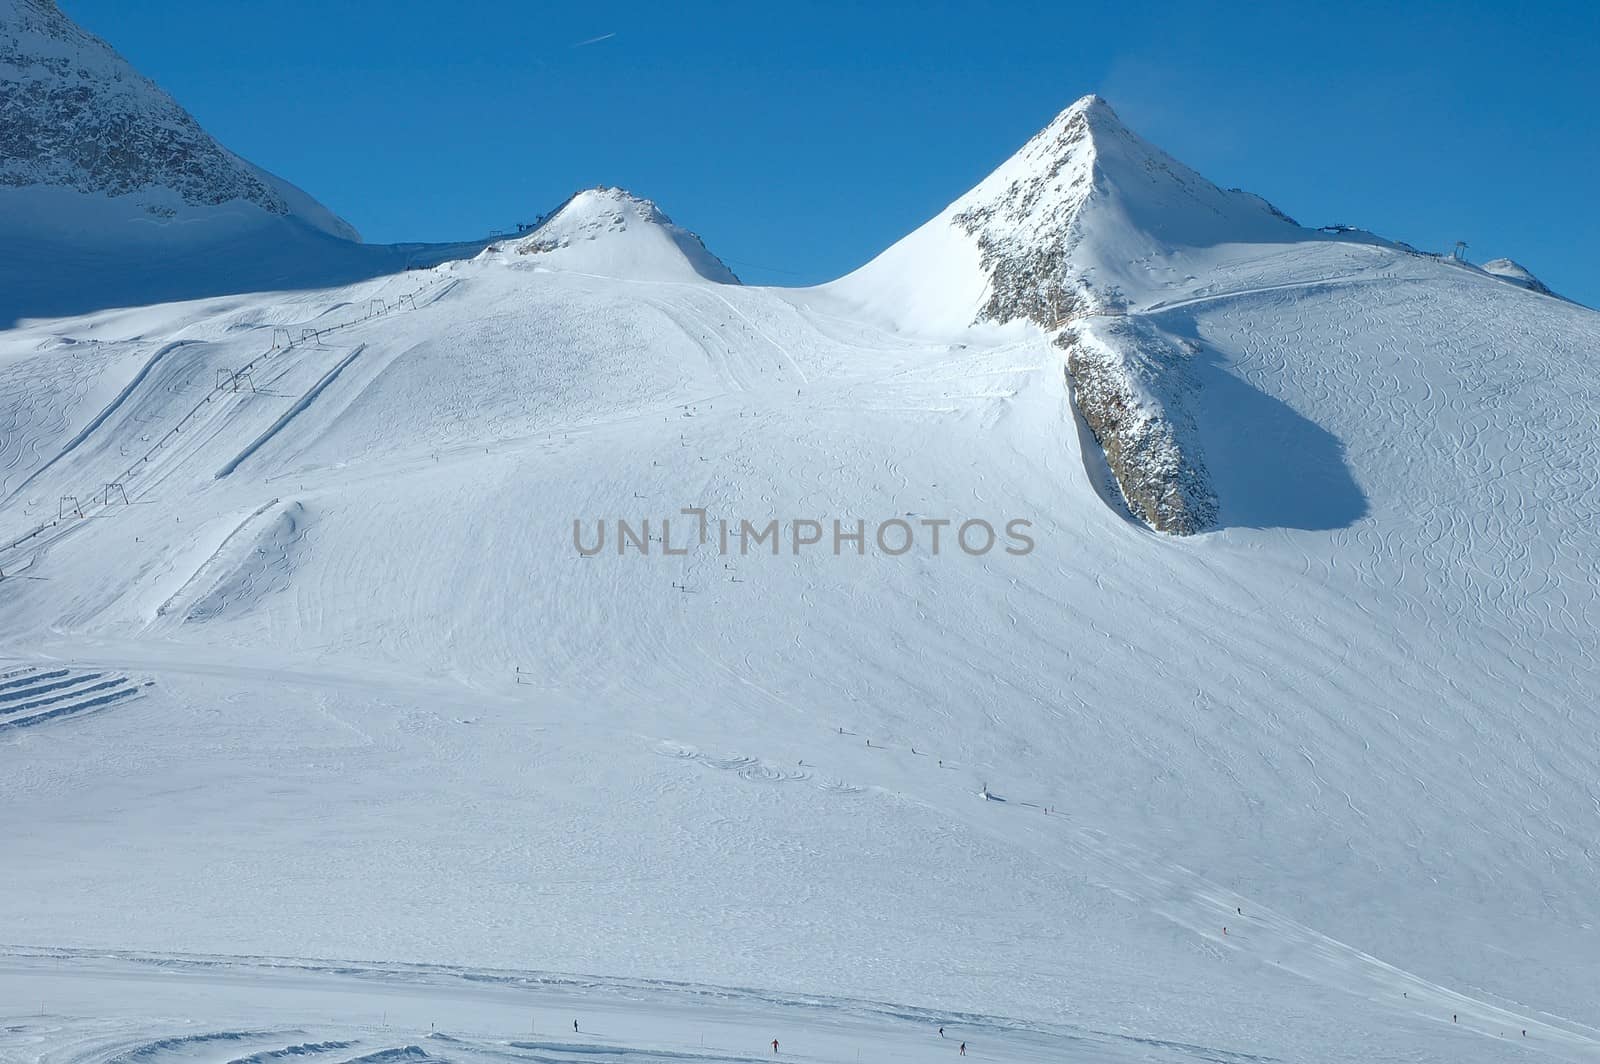 Ski slopes on Hintertux glacier by janhetman